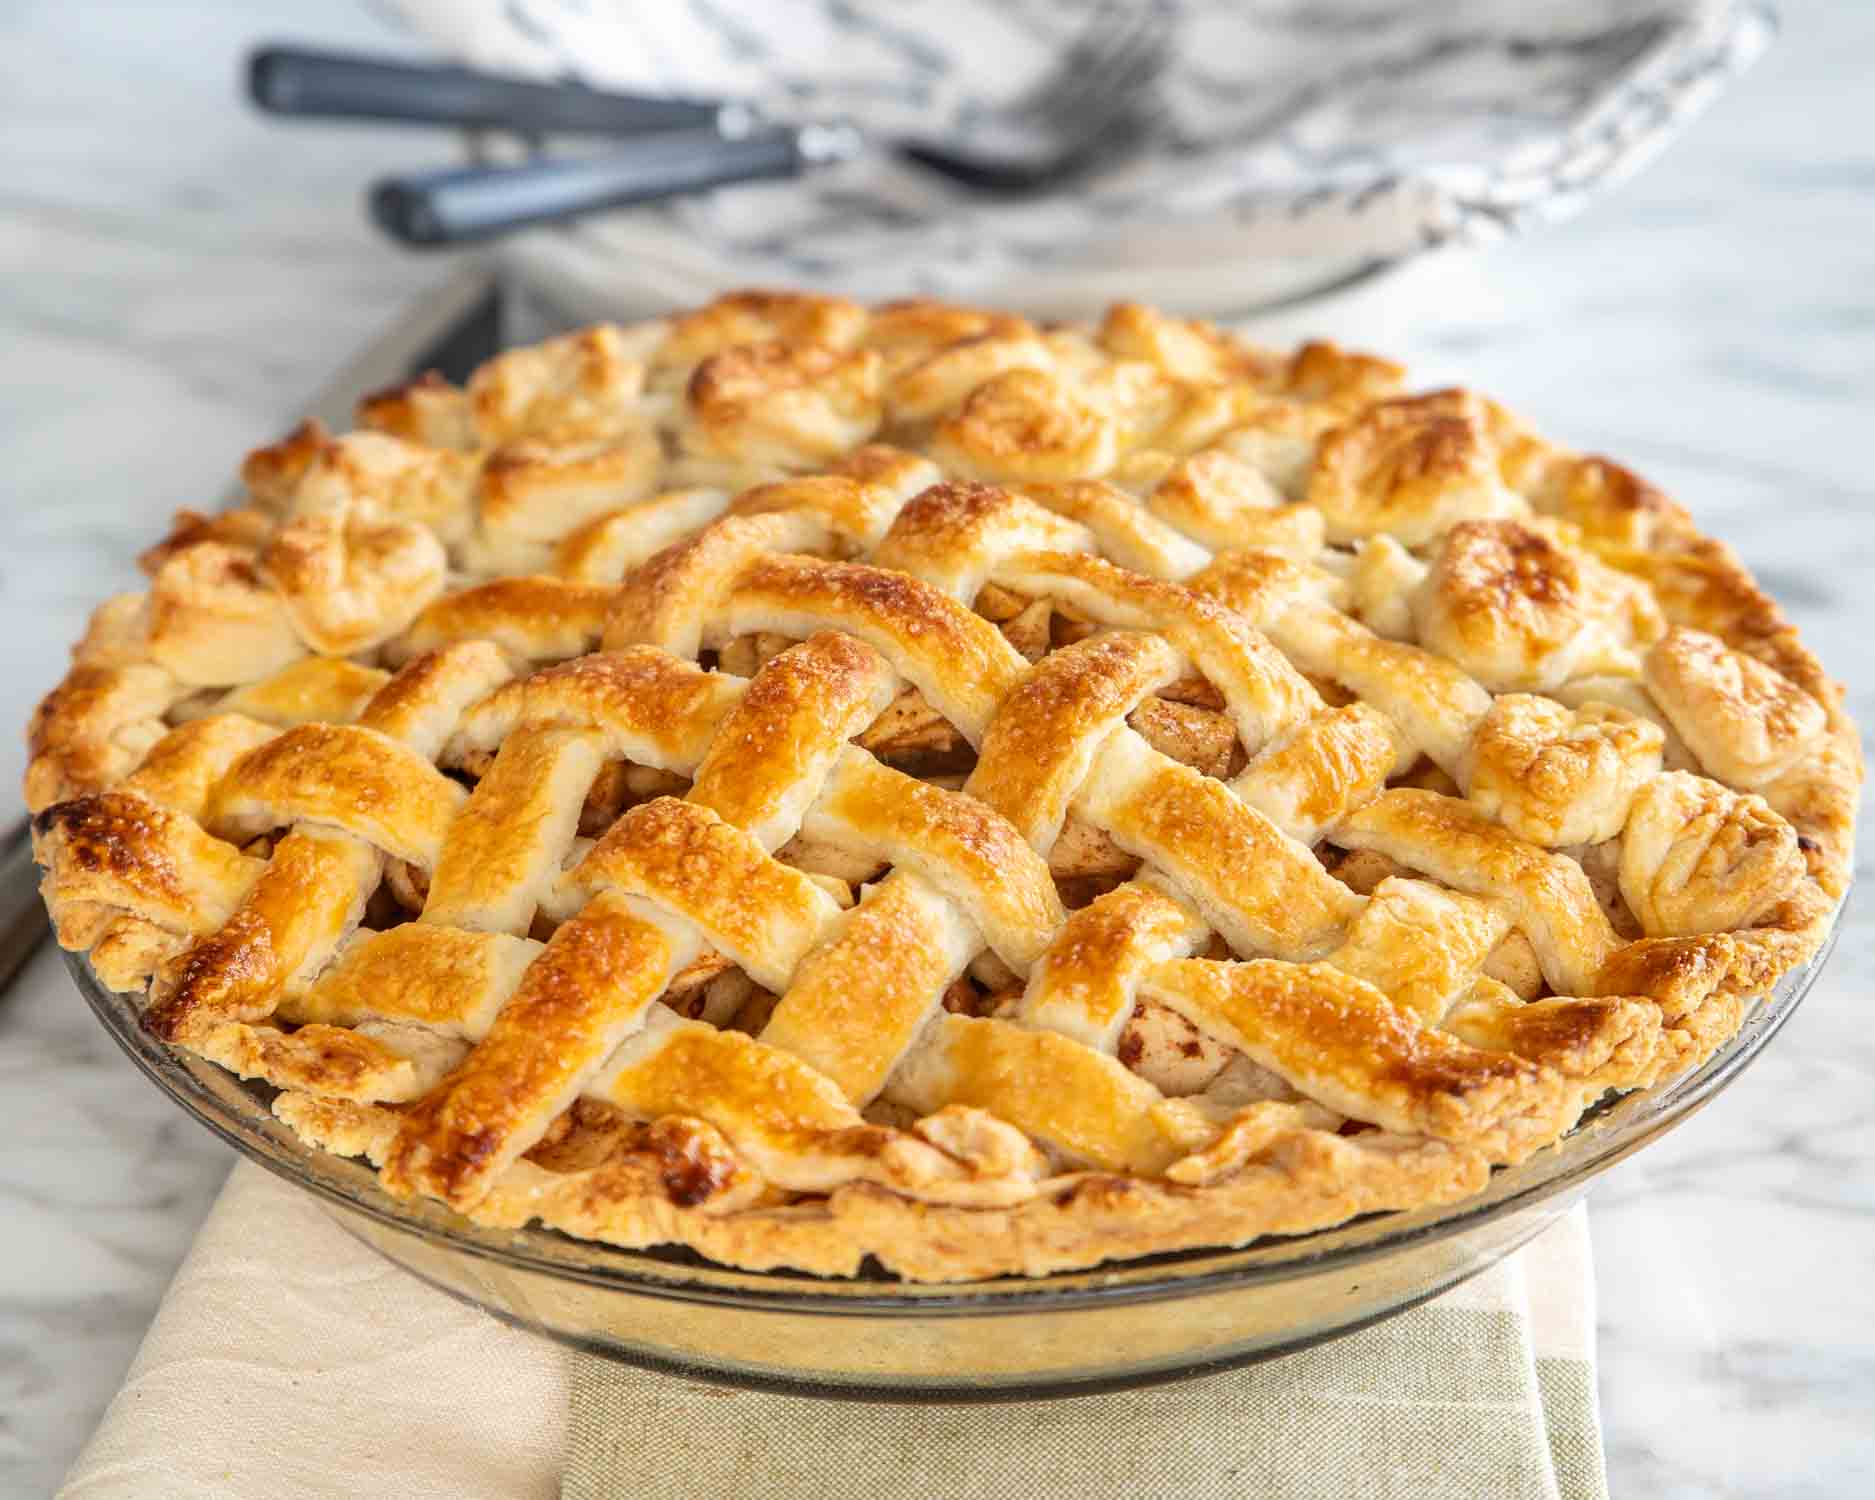 freshly baked apple pie in a pie dish.